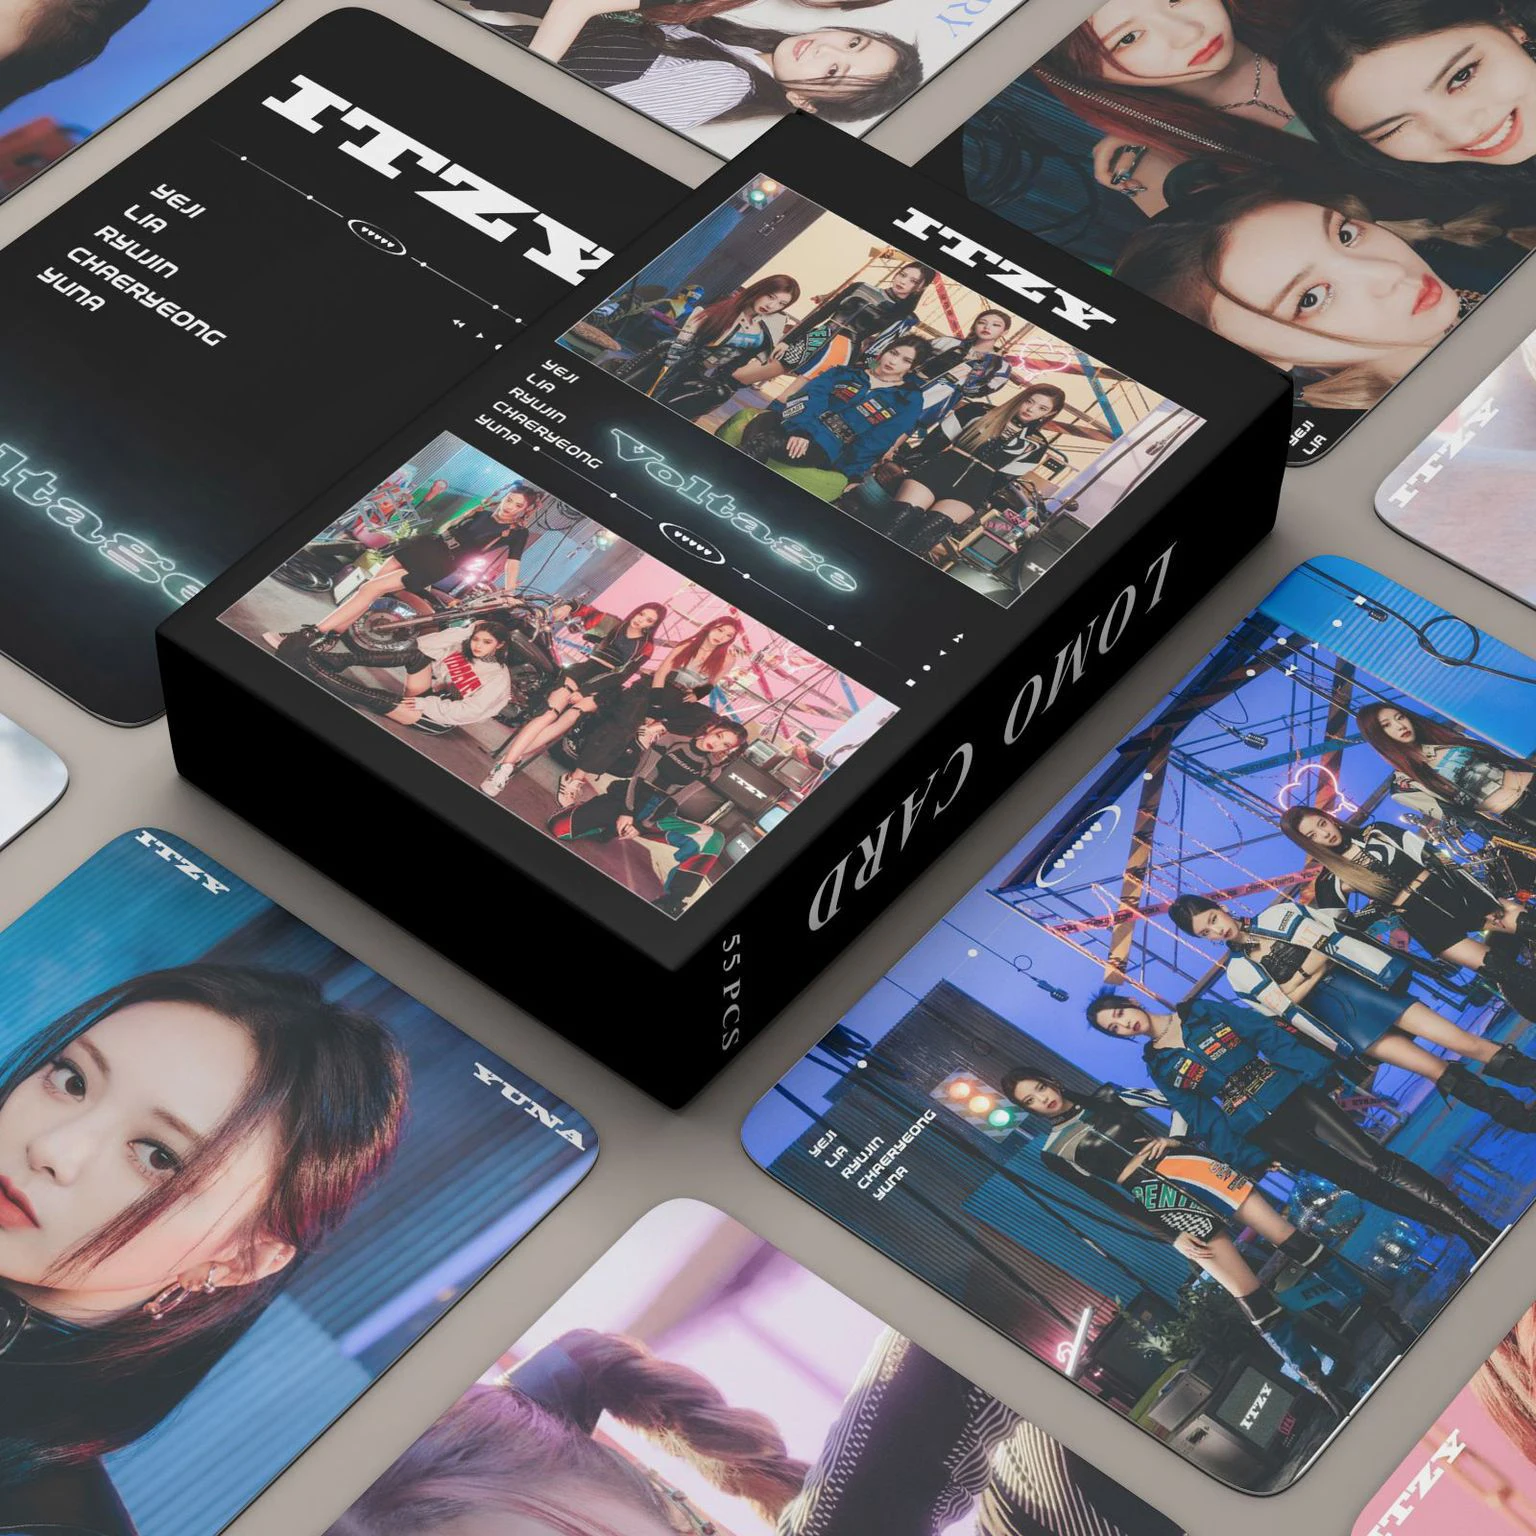 

55PCS/Set ITZY Photocards BP Aespa IVE Kep1er Twice Red Velvet Lomo Card Stayc Photo Cards New Album 2022 Photocard